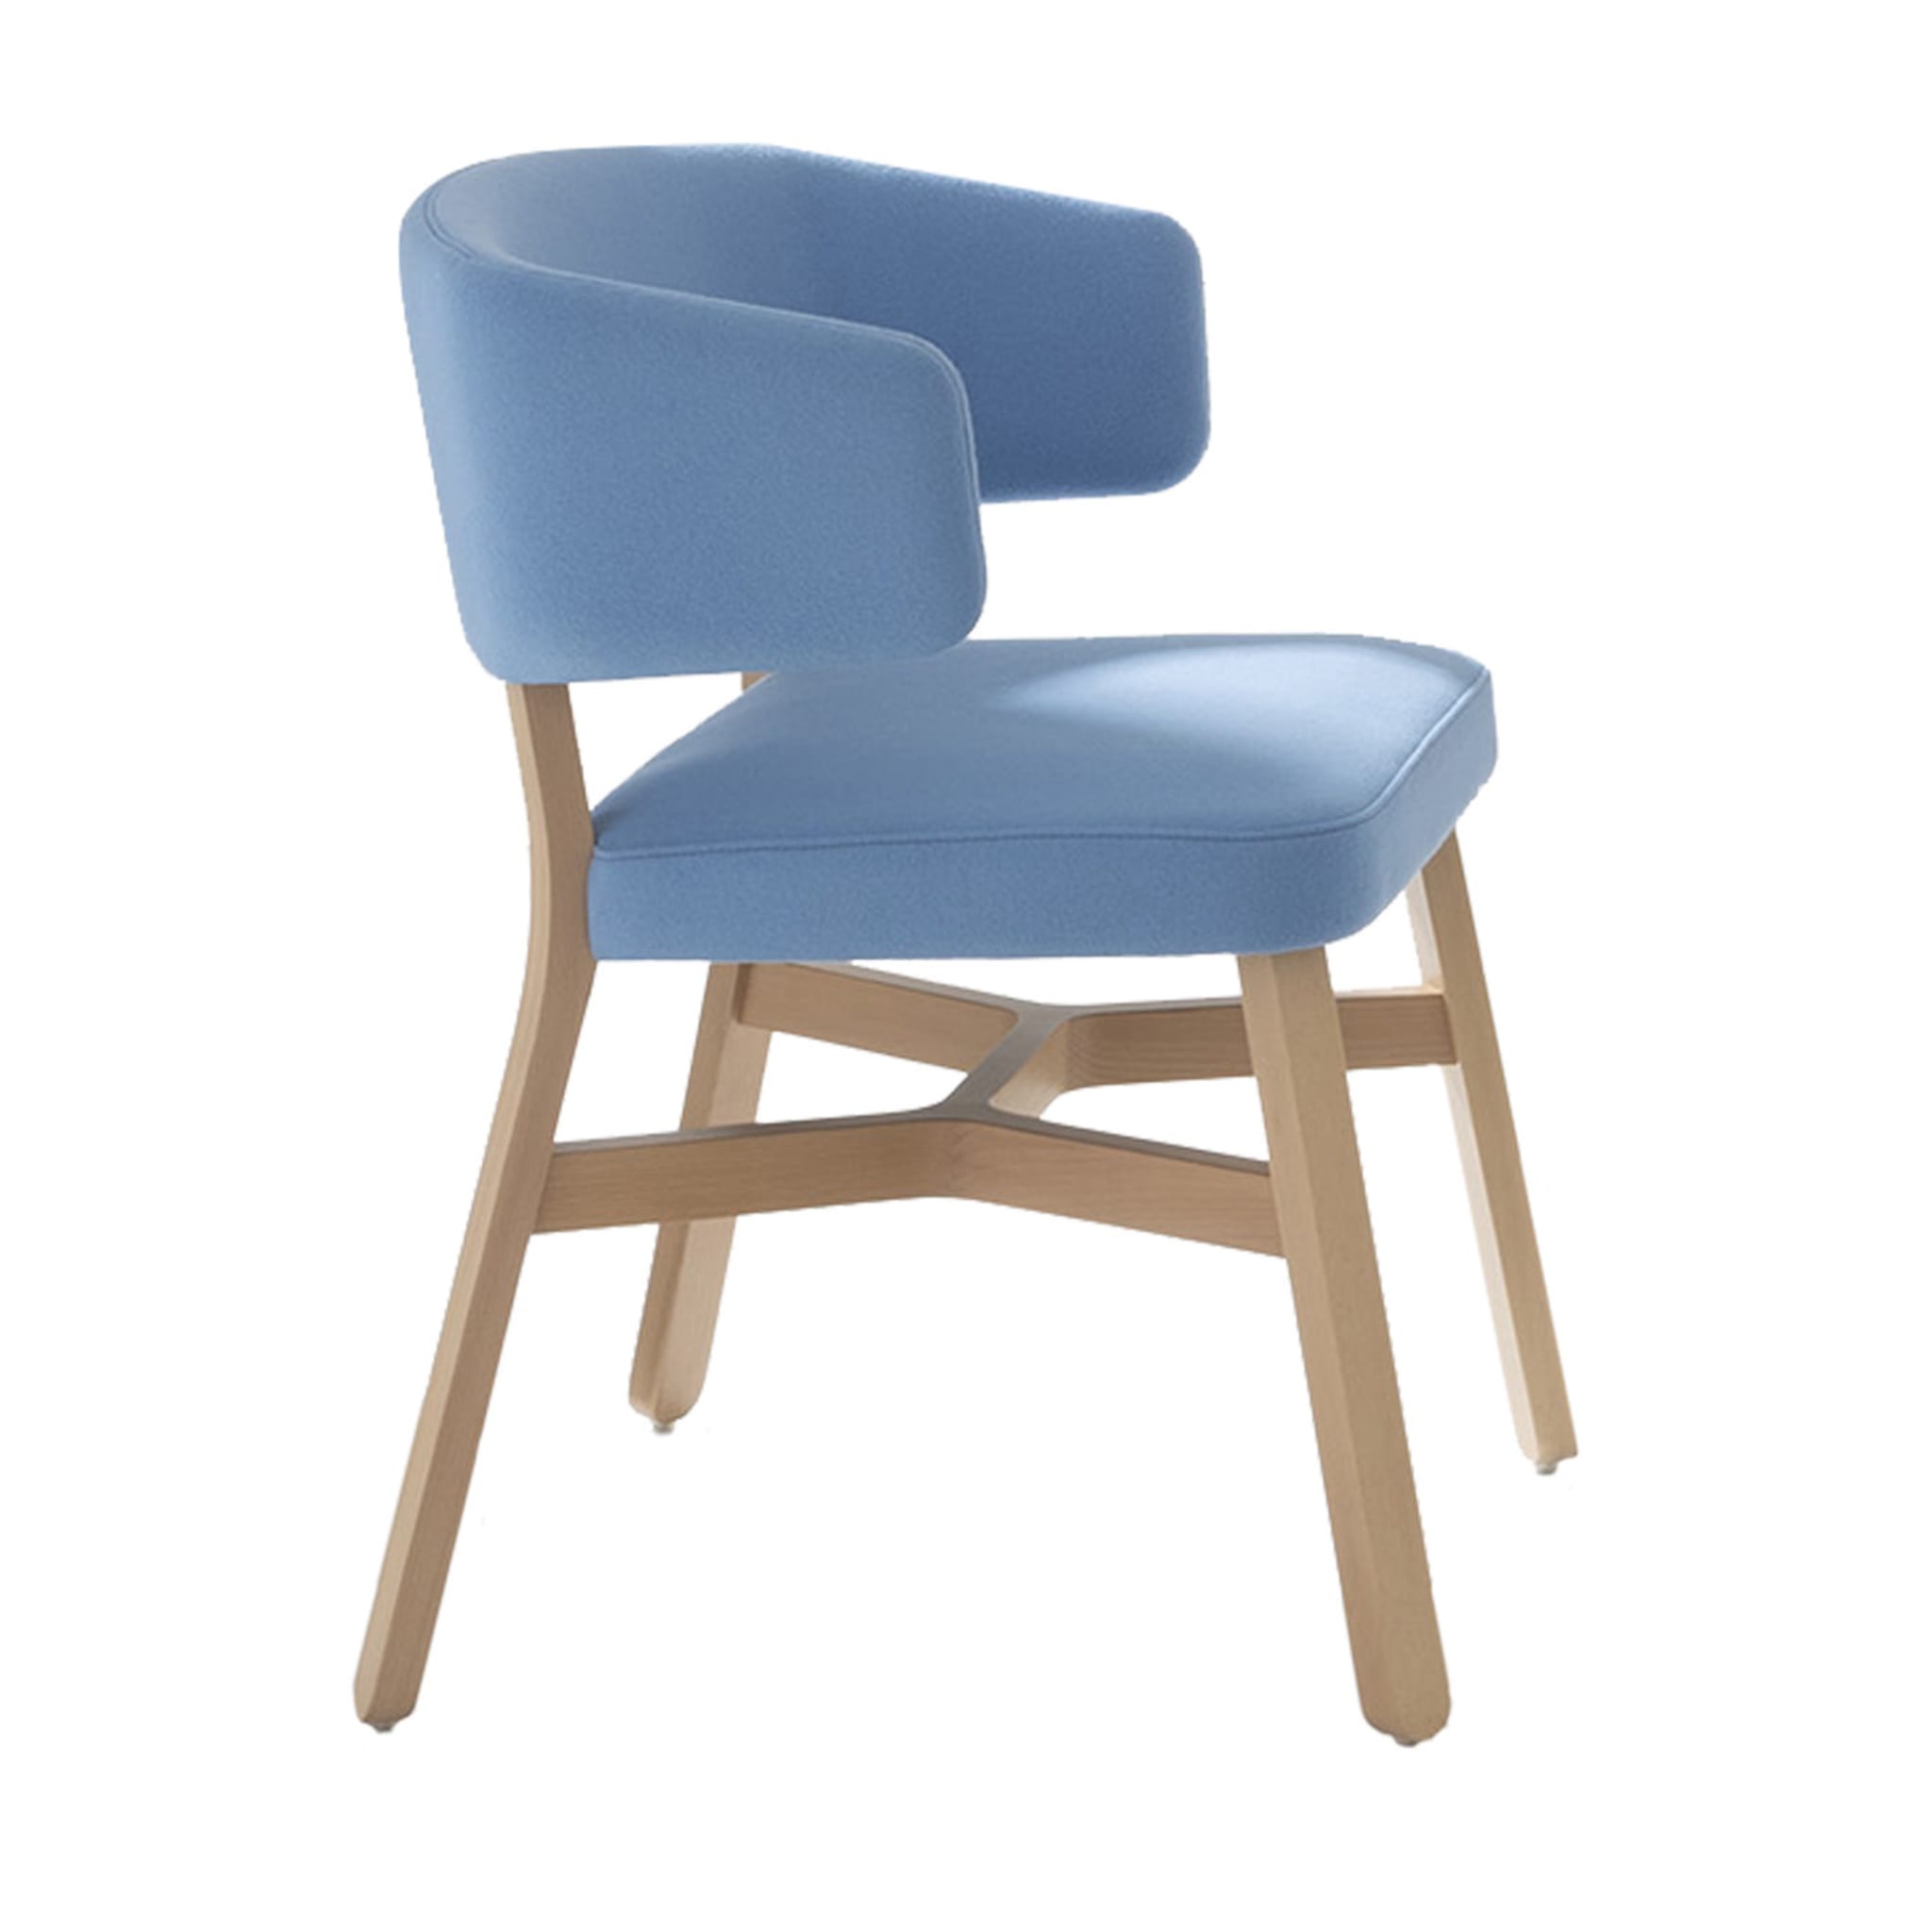 Croissant 571 Azure Chair by Emilio Nanni - Main view